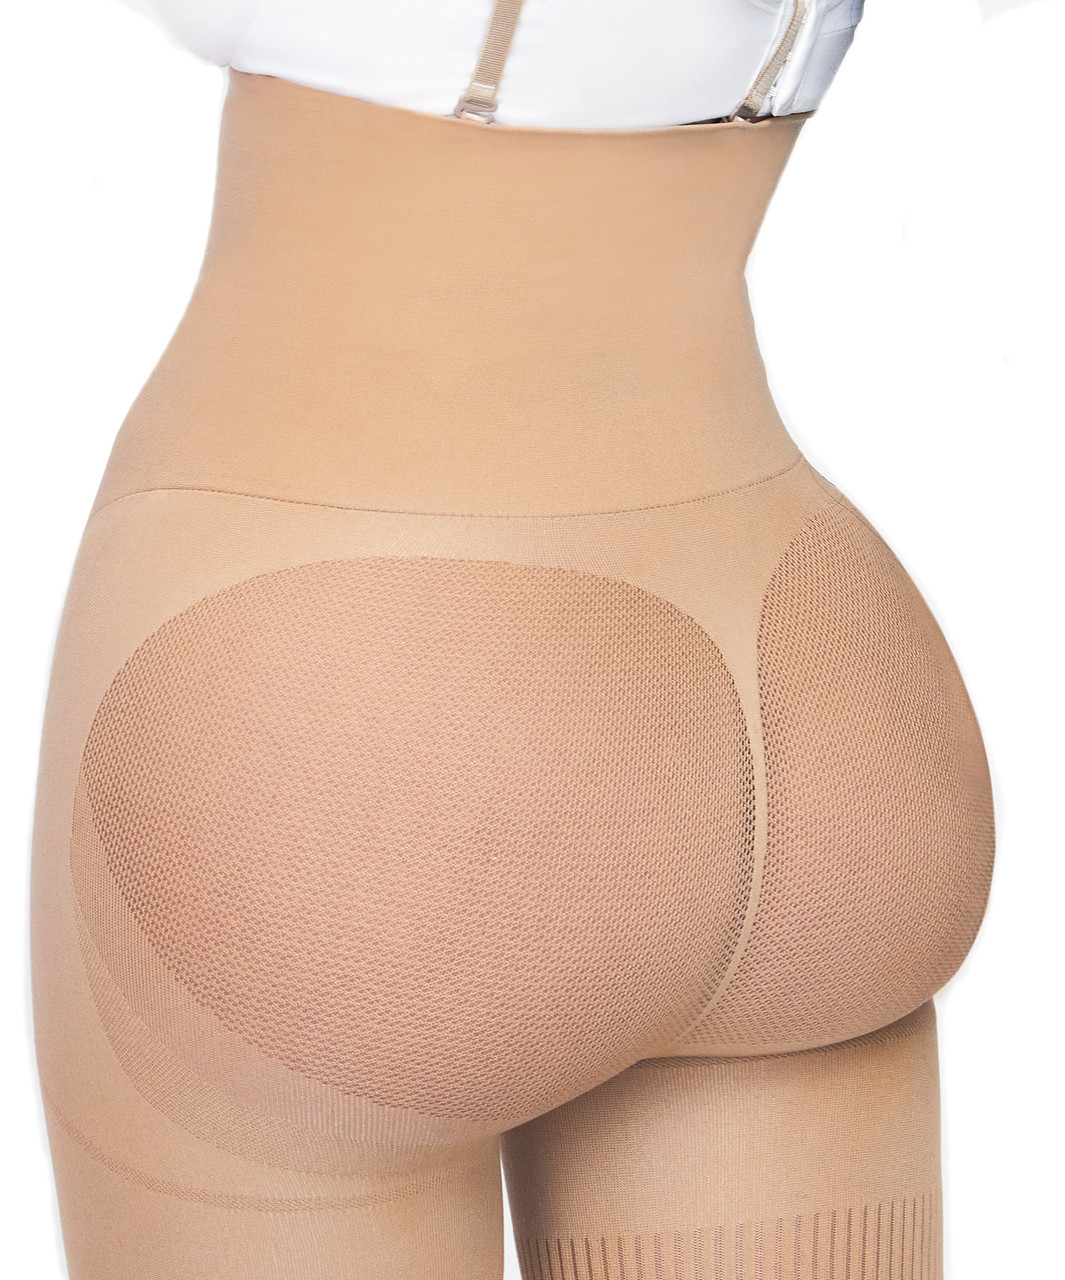 EHQJNJ Female Full Body Shapewear Women Shapewear Double Tummy Layer  Control Body Shaper Lifter Seamless High Waist Workout Bodysuit Corset  Shapewear